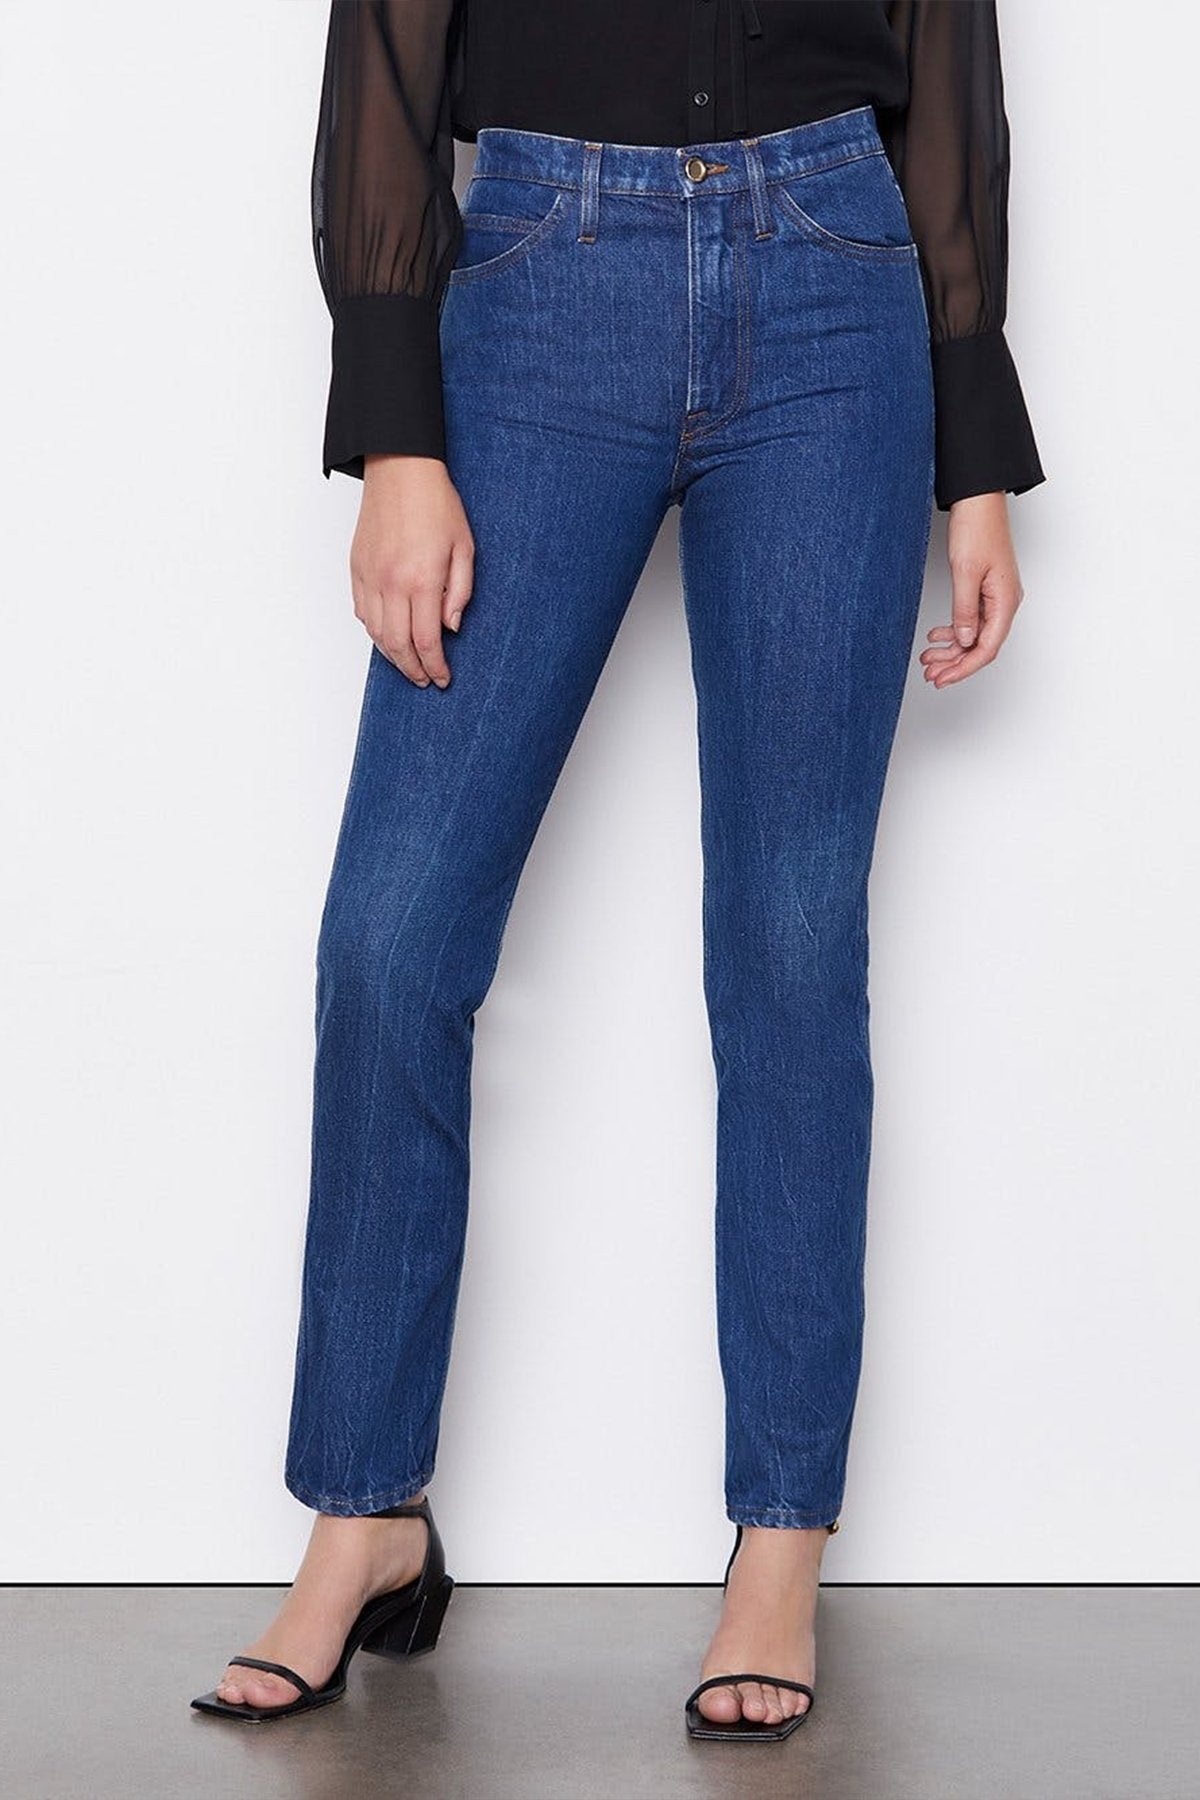 Le Italien True Straight Jean in Vintage Blue - shop-olivia.com